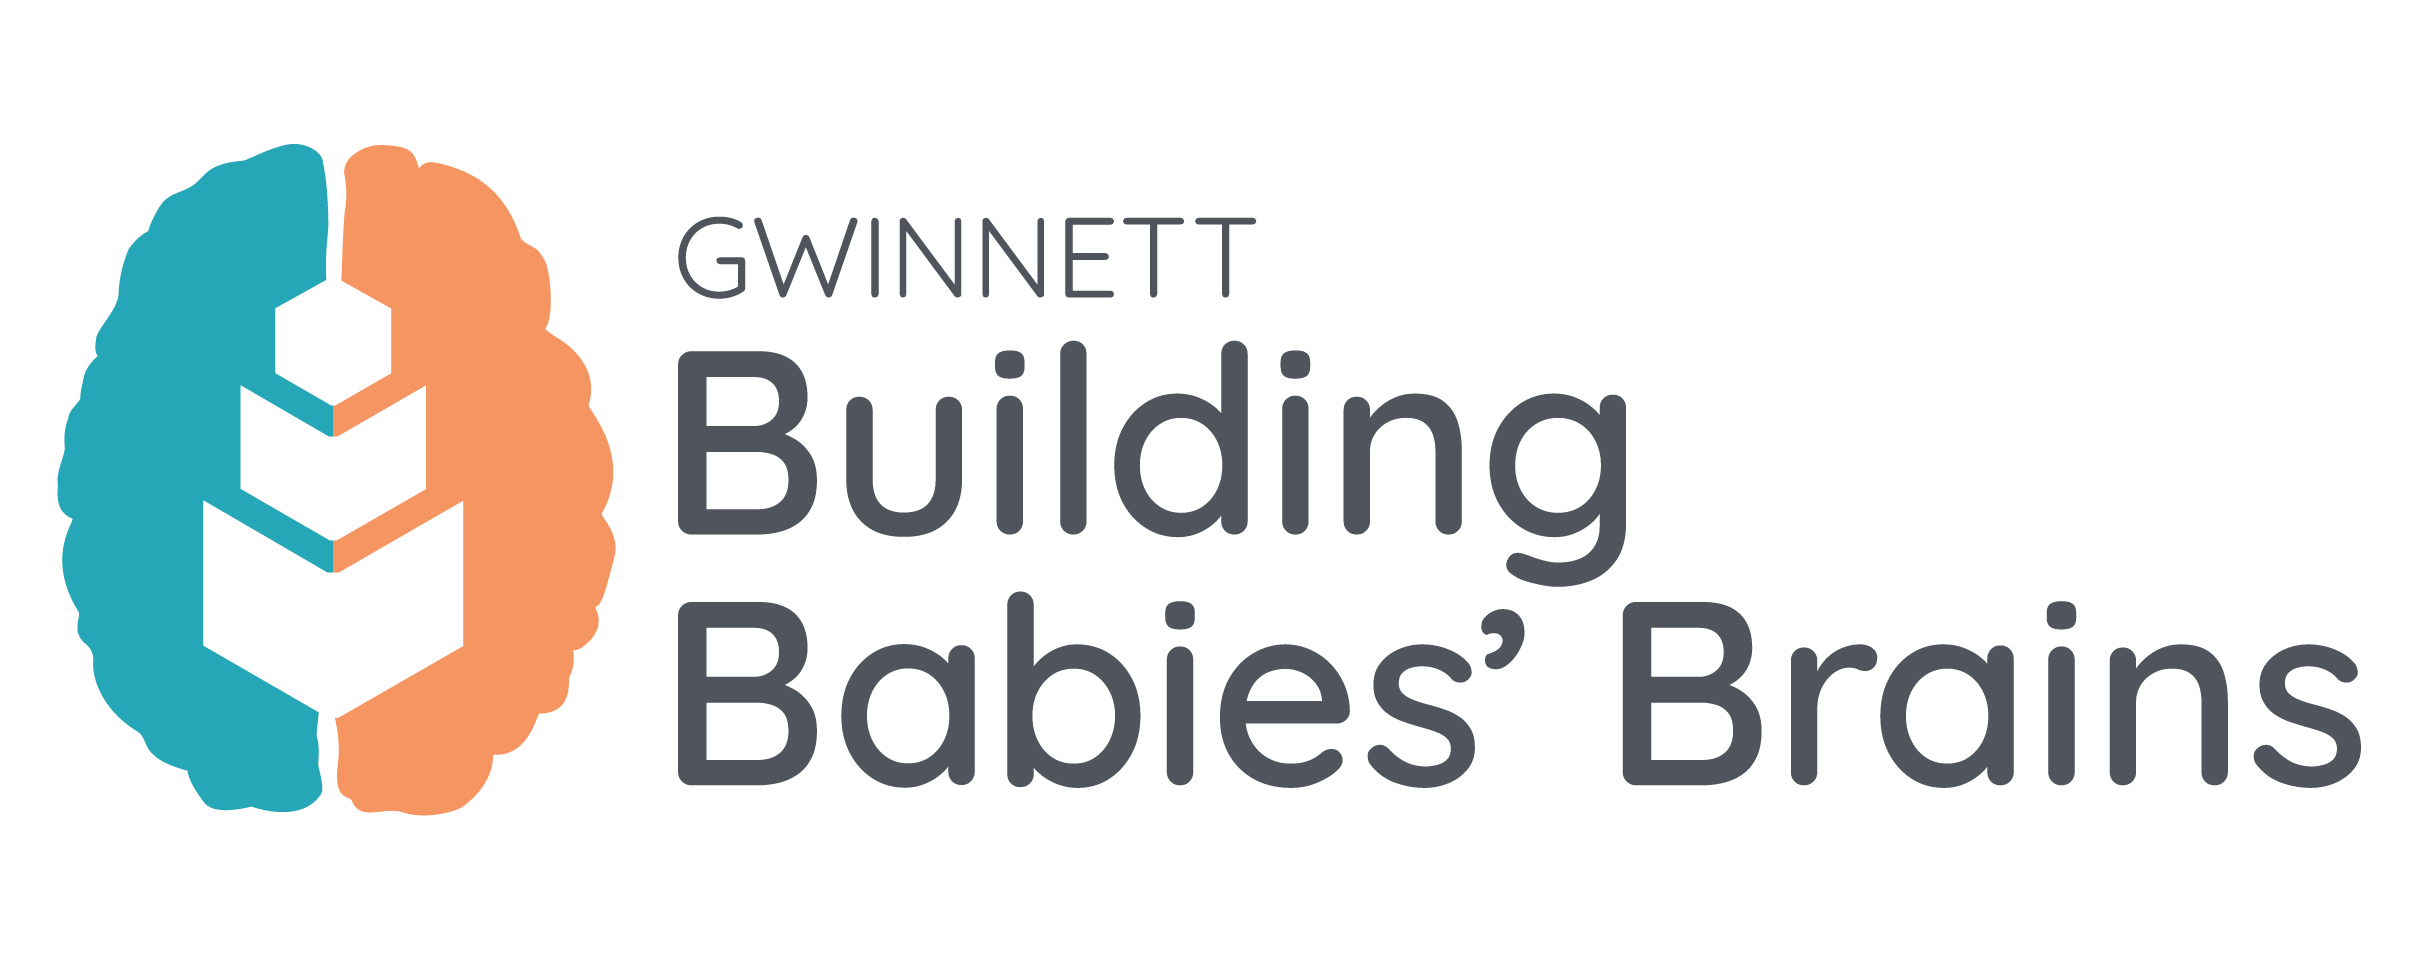 Gwinnett Building Babies' Brains Logo